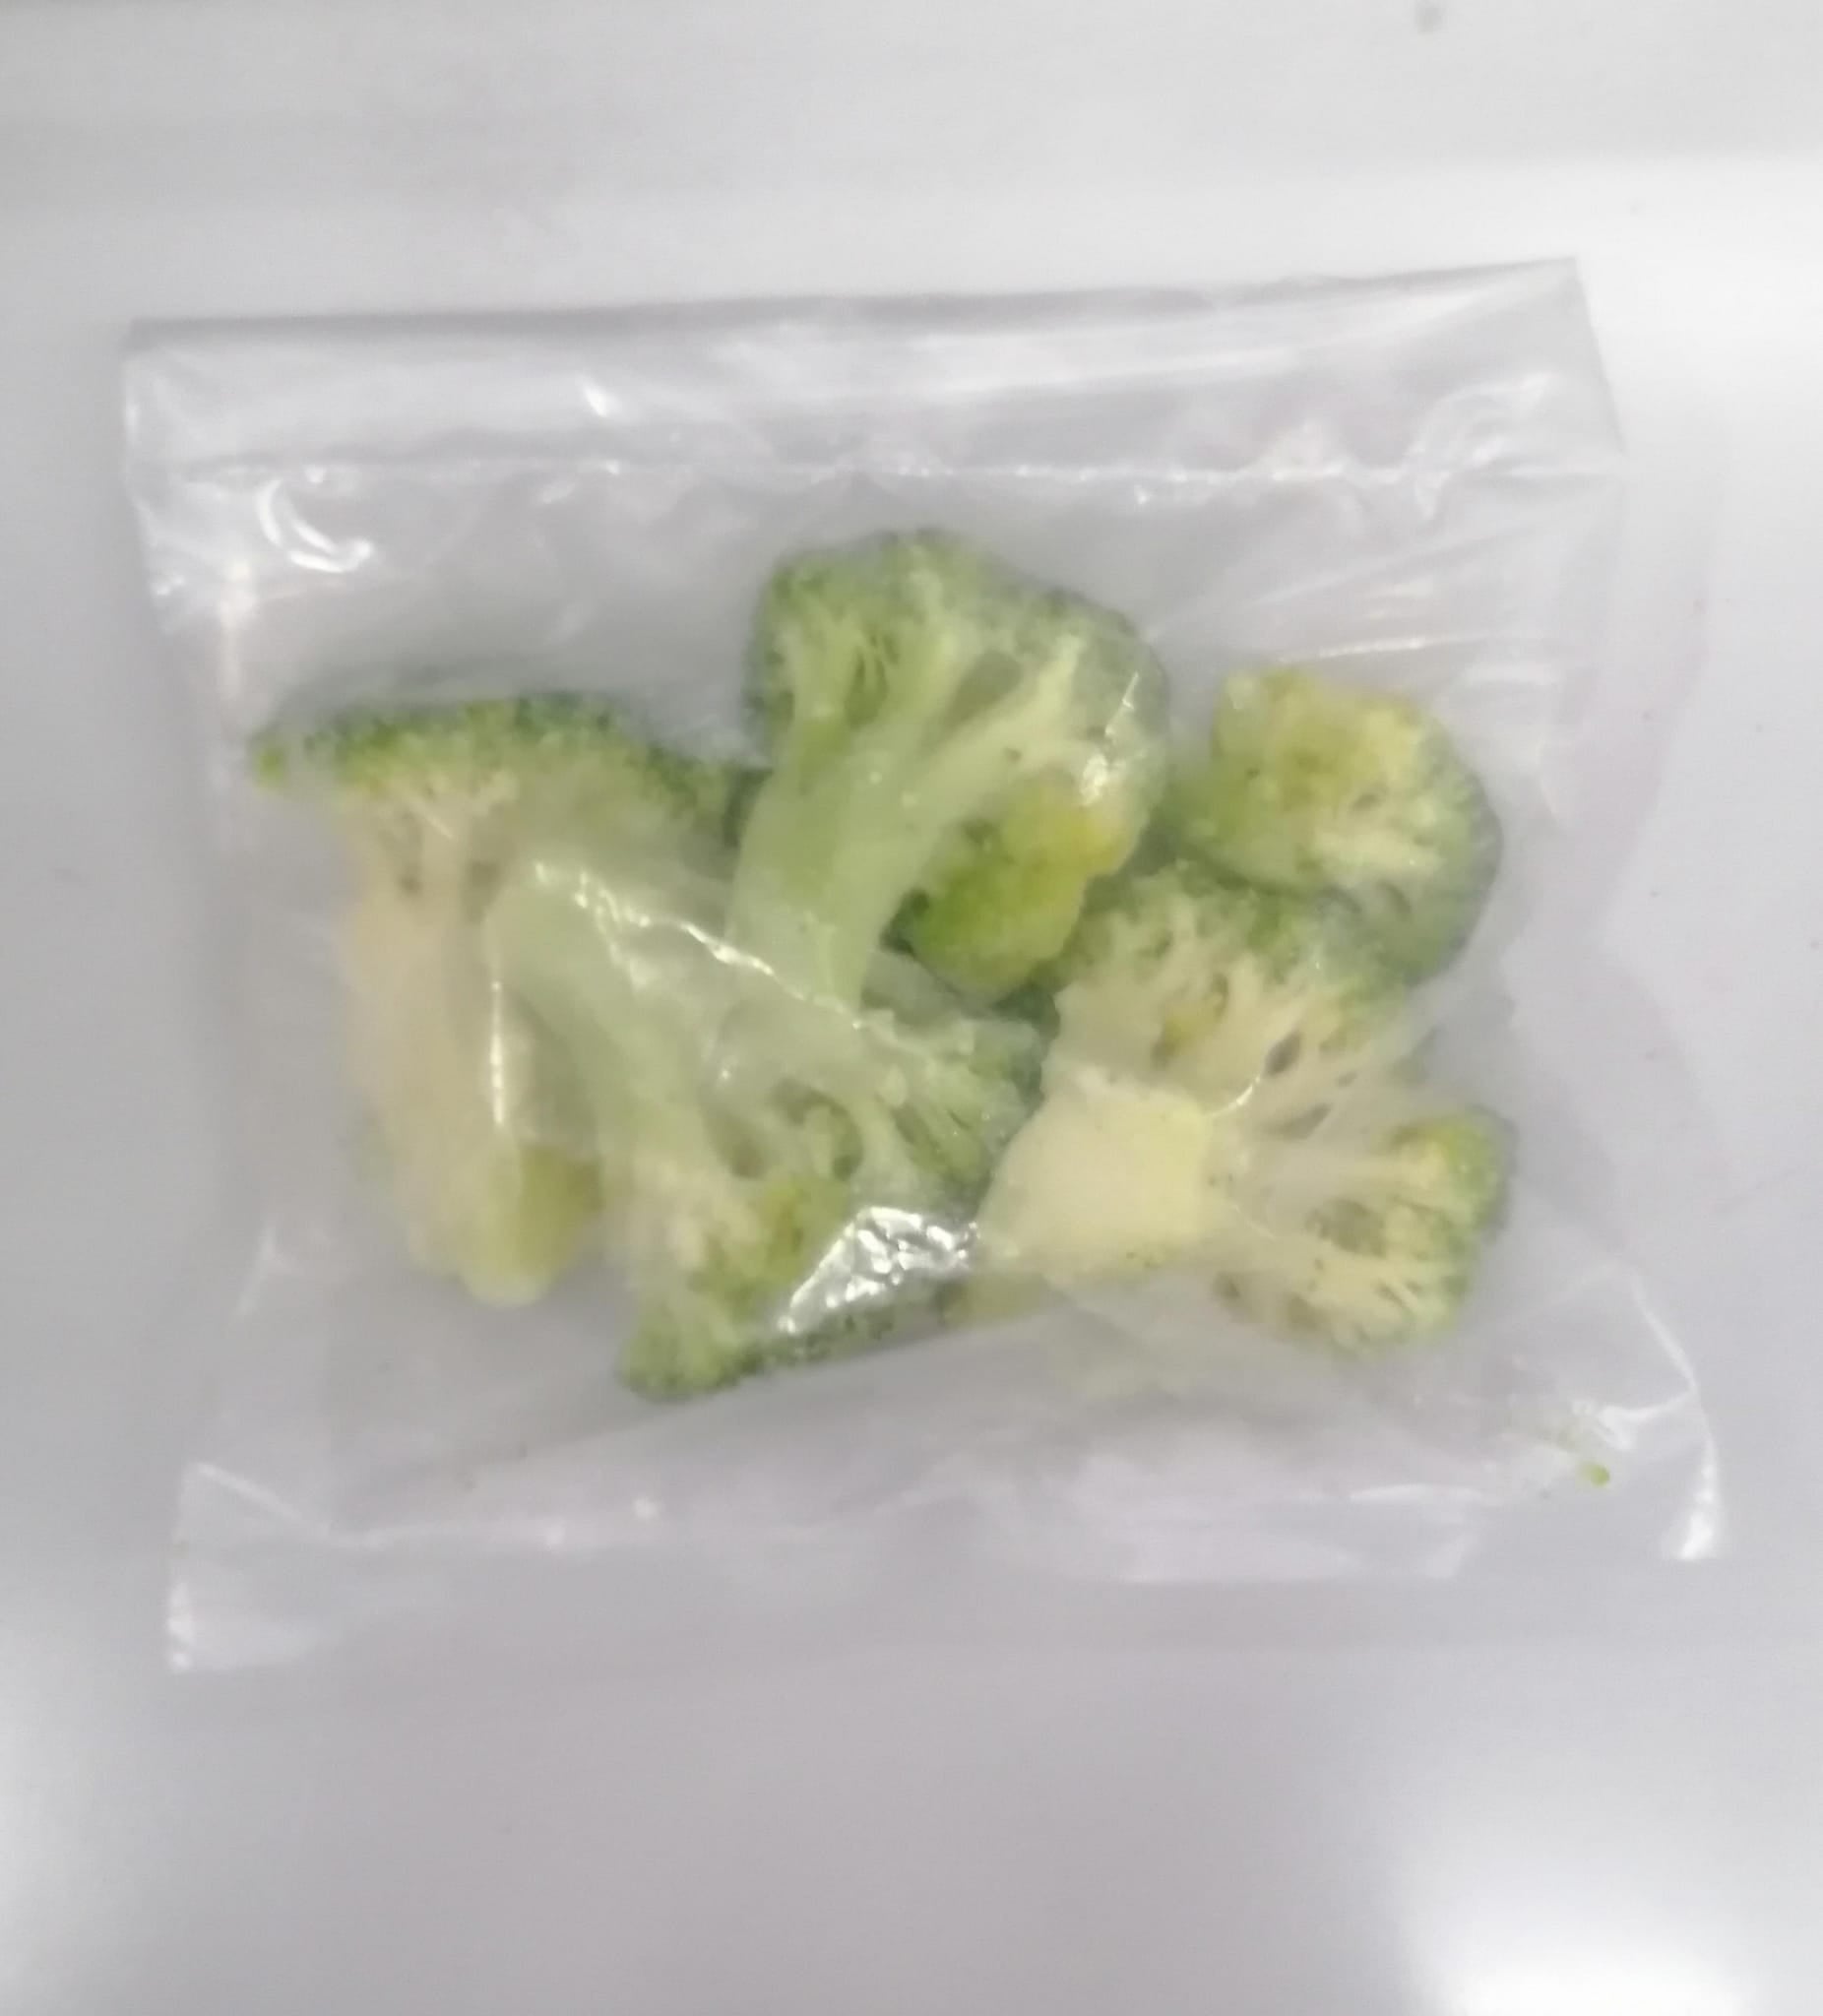 #2566-A士耳其 有機 西蘭花 200克 ( 分包裝 )(急凍 - 零下18度)Turkey Organic Broccoli